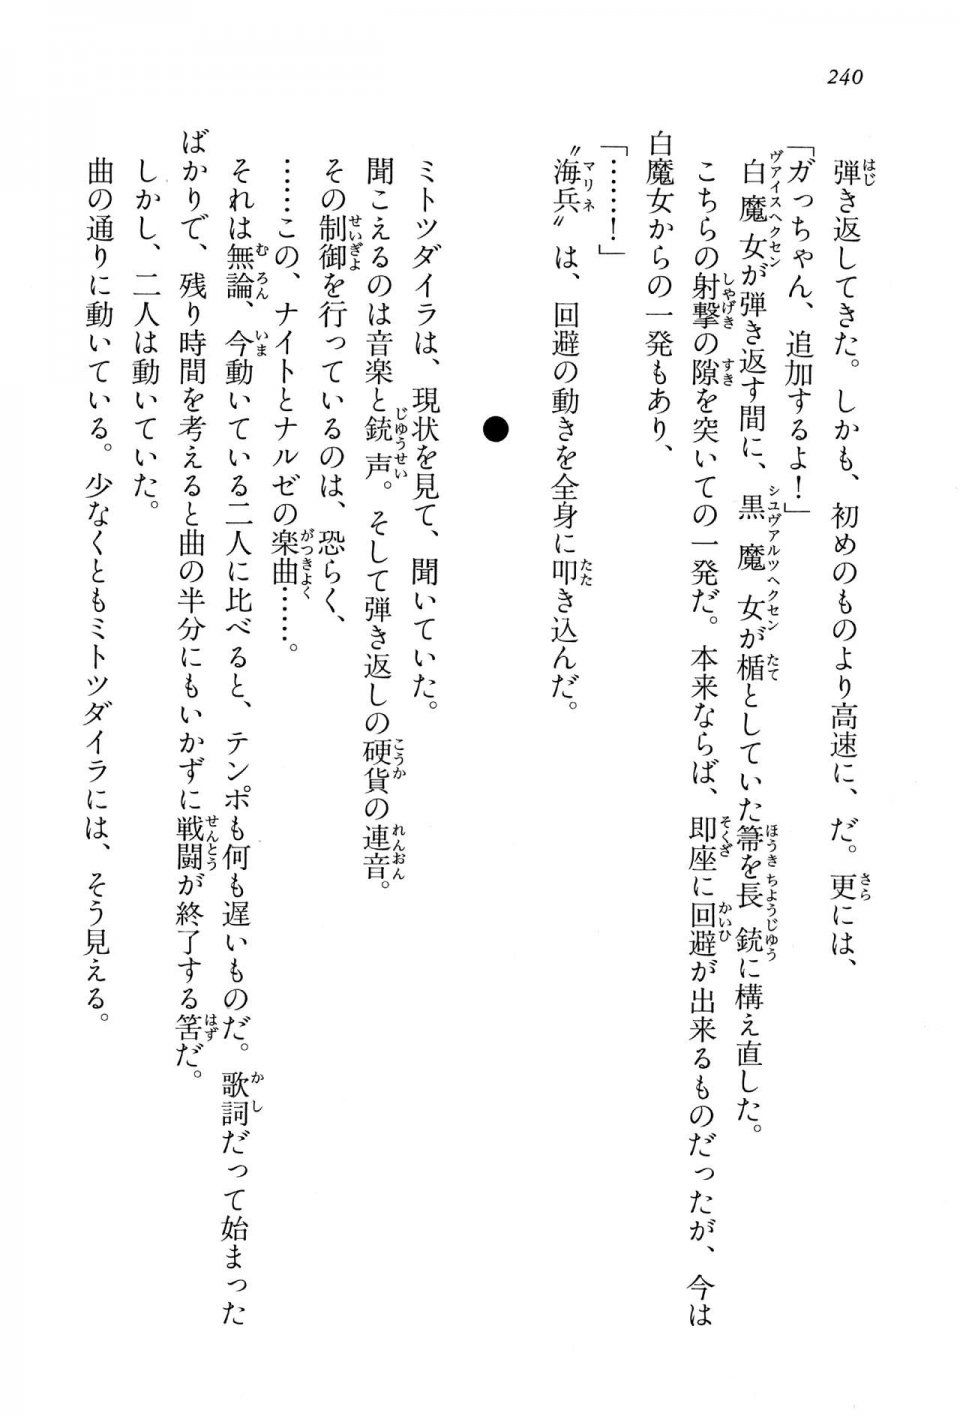 Kyoukai Senjou no Horizon BD Special Mininovel Vol 6(3B) - Photo #244